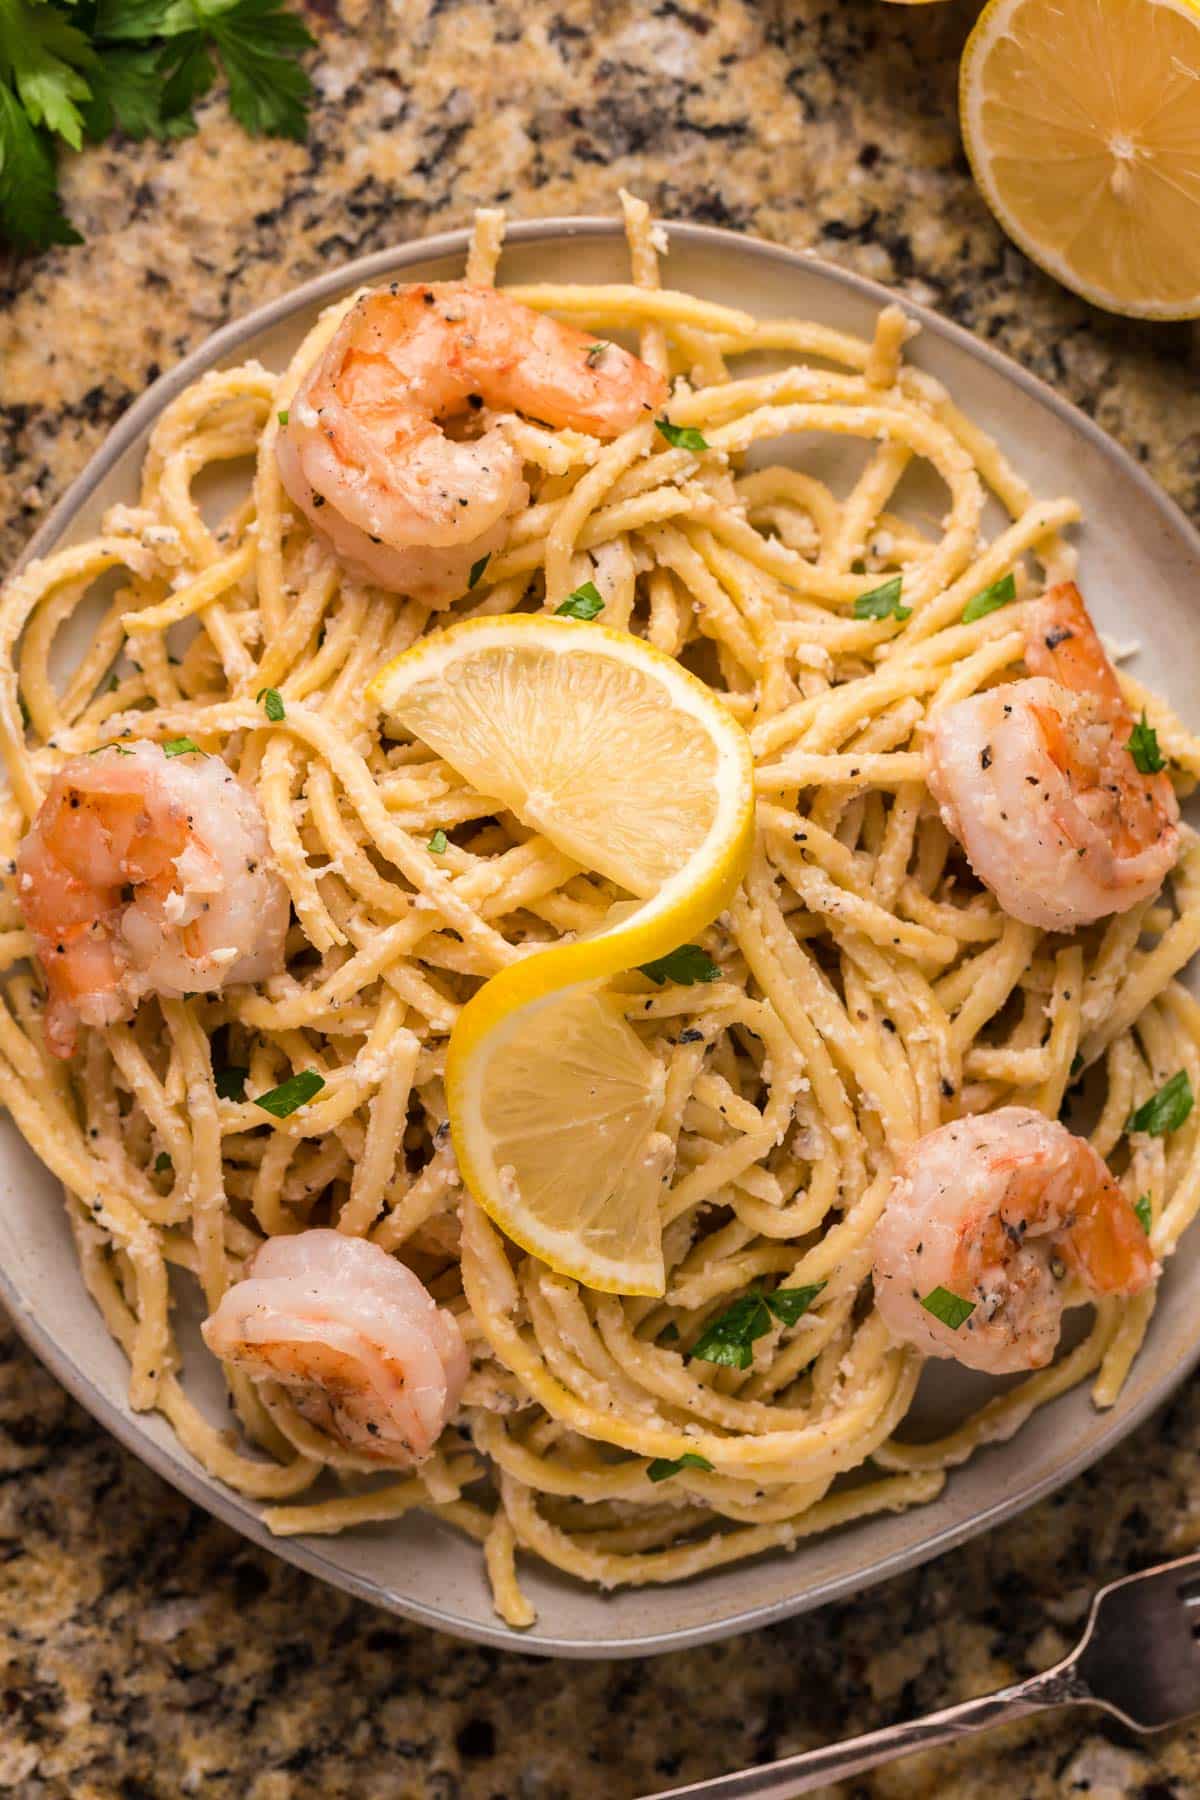 a plate of shrimp pasta garnished with a lemon